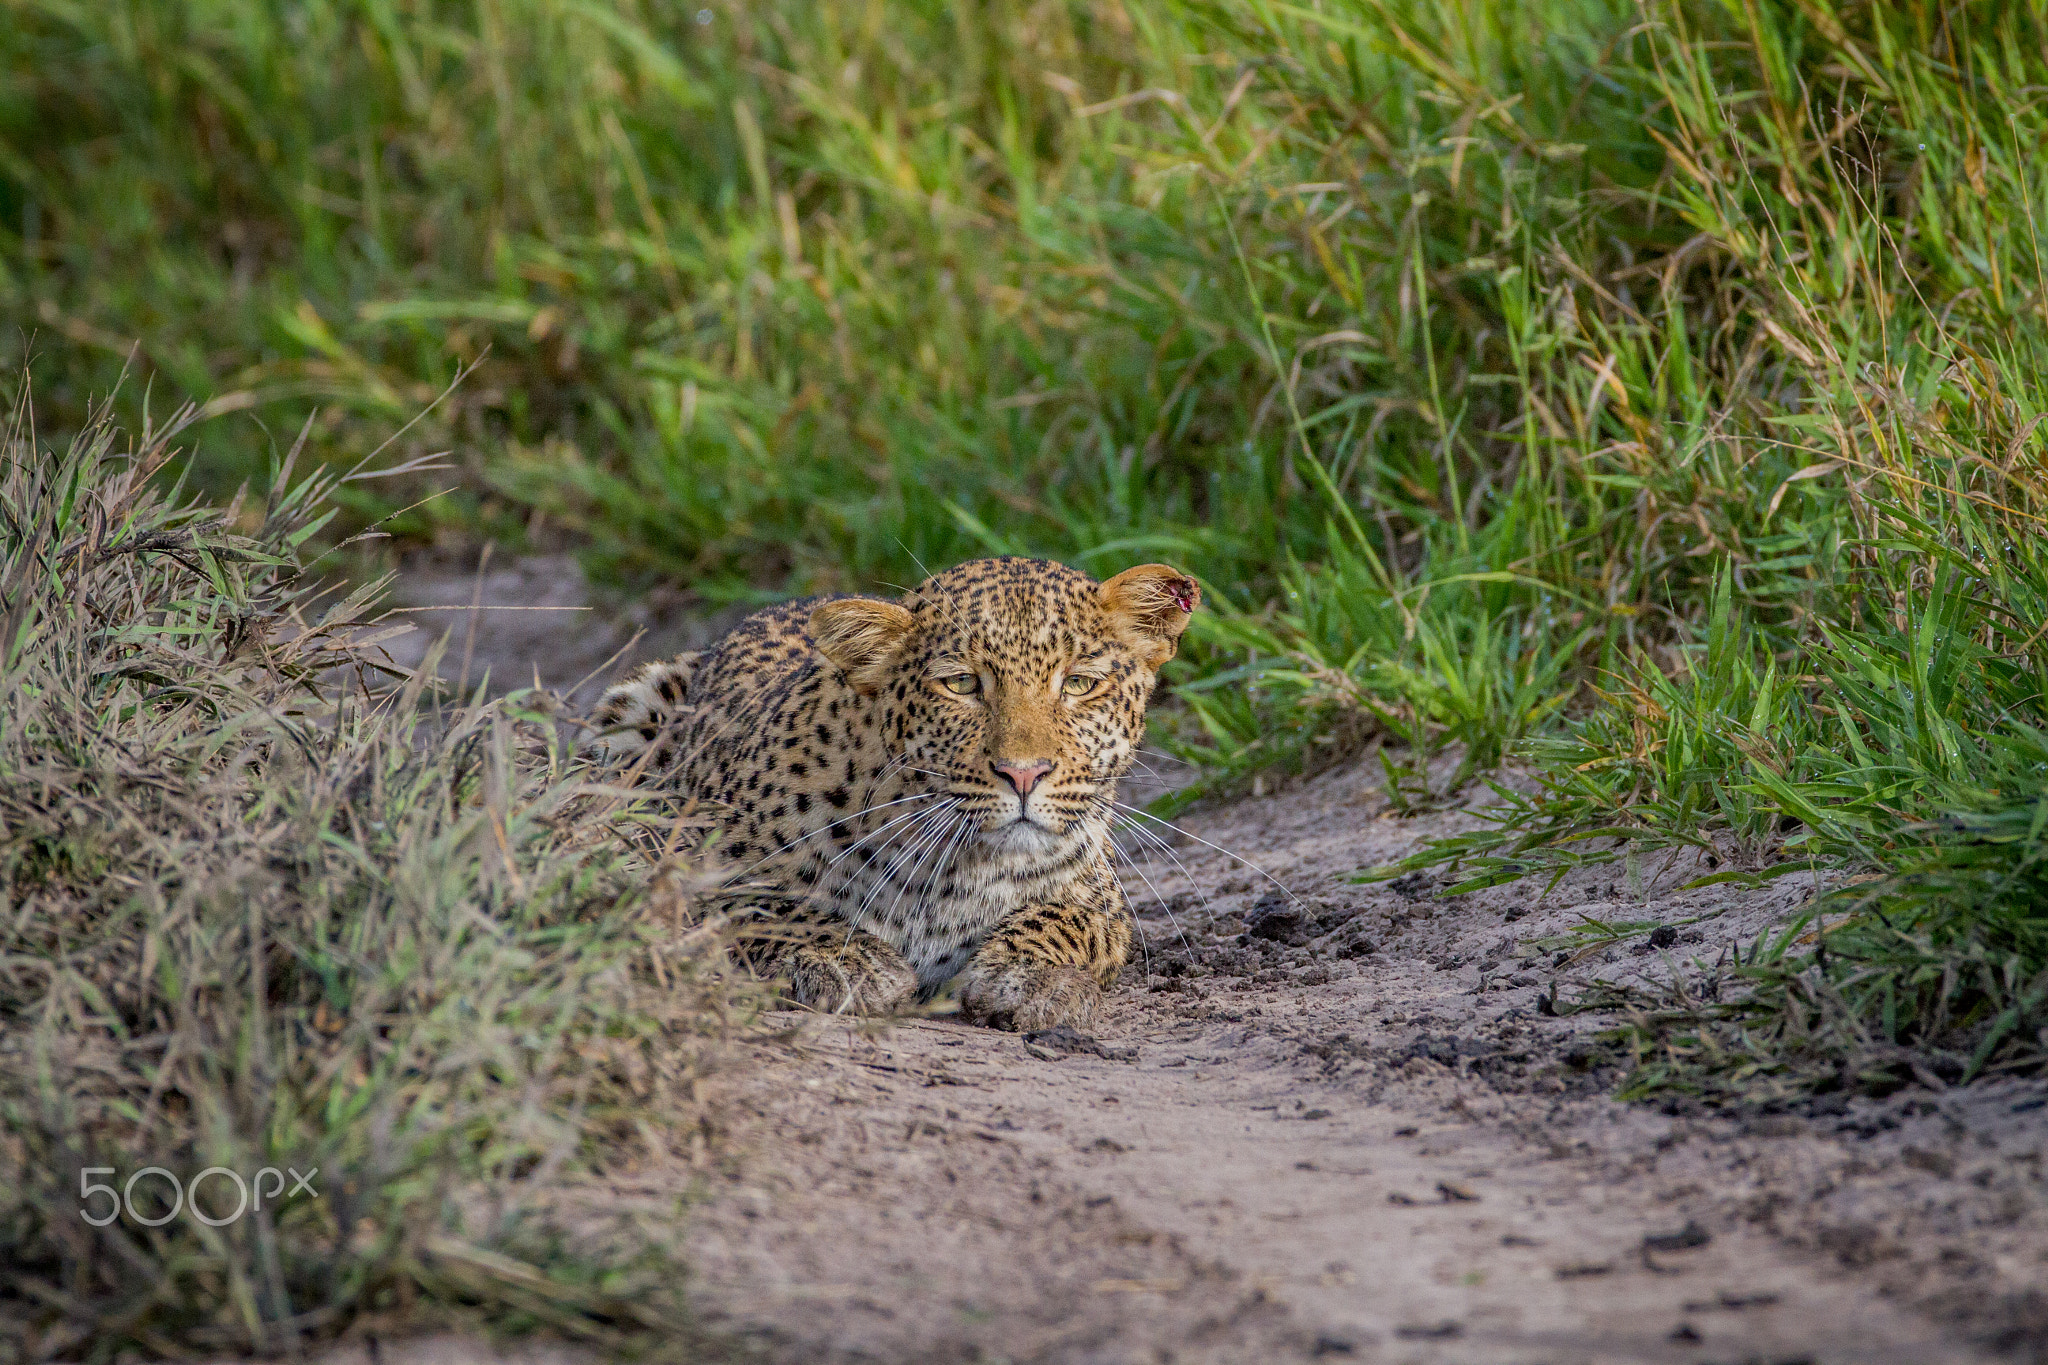 Leopard stalking towards the camera.